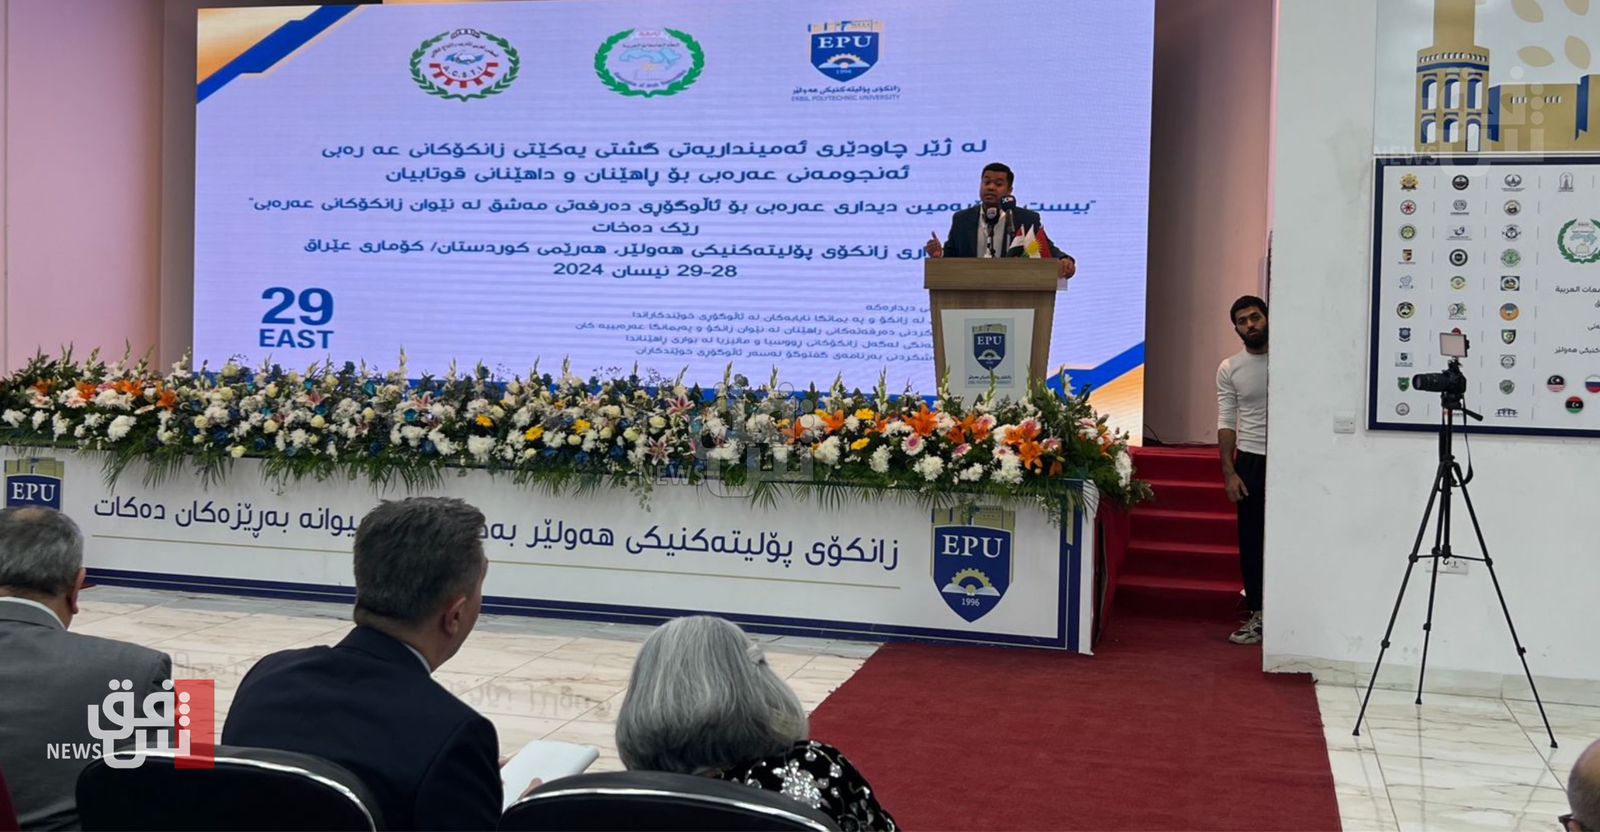 Erbil hosts Arab Forum for university training exchange